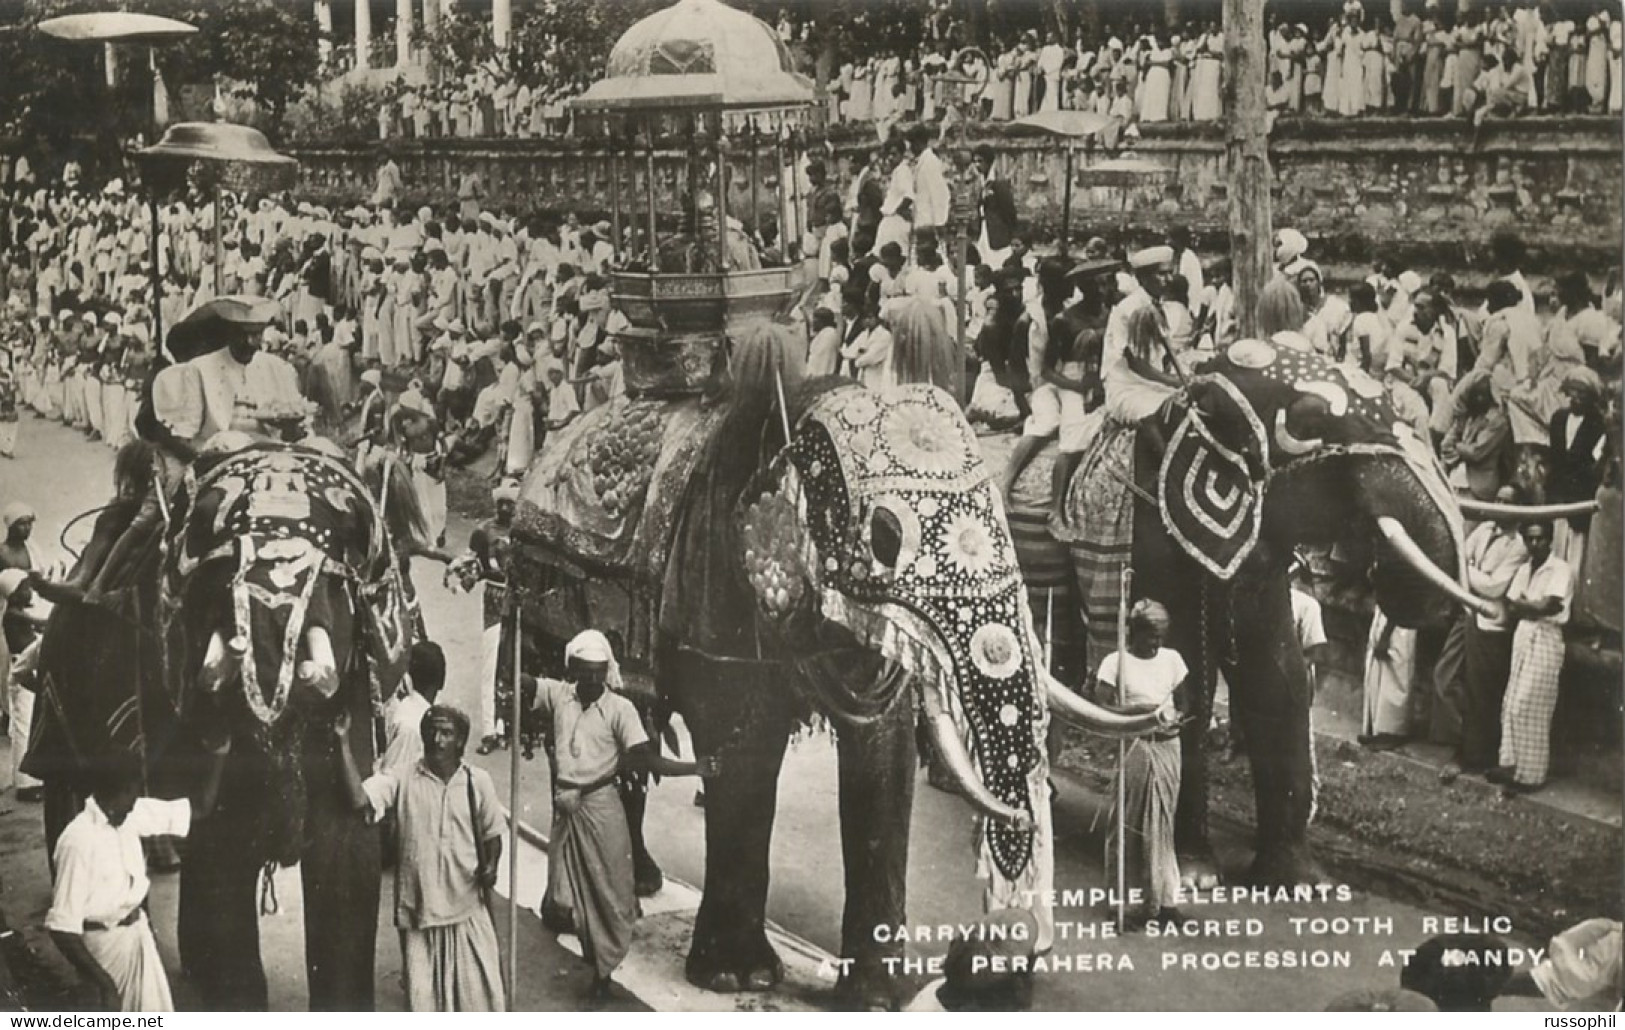 SRI-LANKA (CEYLON) – TEMPLE ELEPHANTS CARRYING THE SACRED TOOTH RELIC  – PUB. BY THOMAS - 1951  - Sri Lanka (Ceylon)